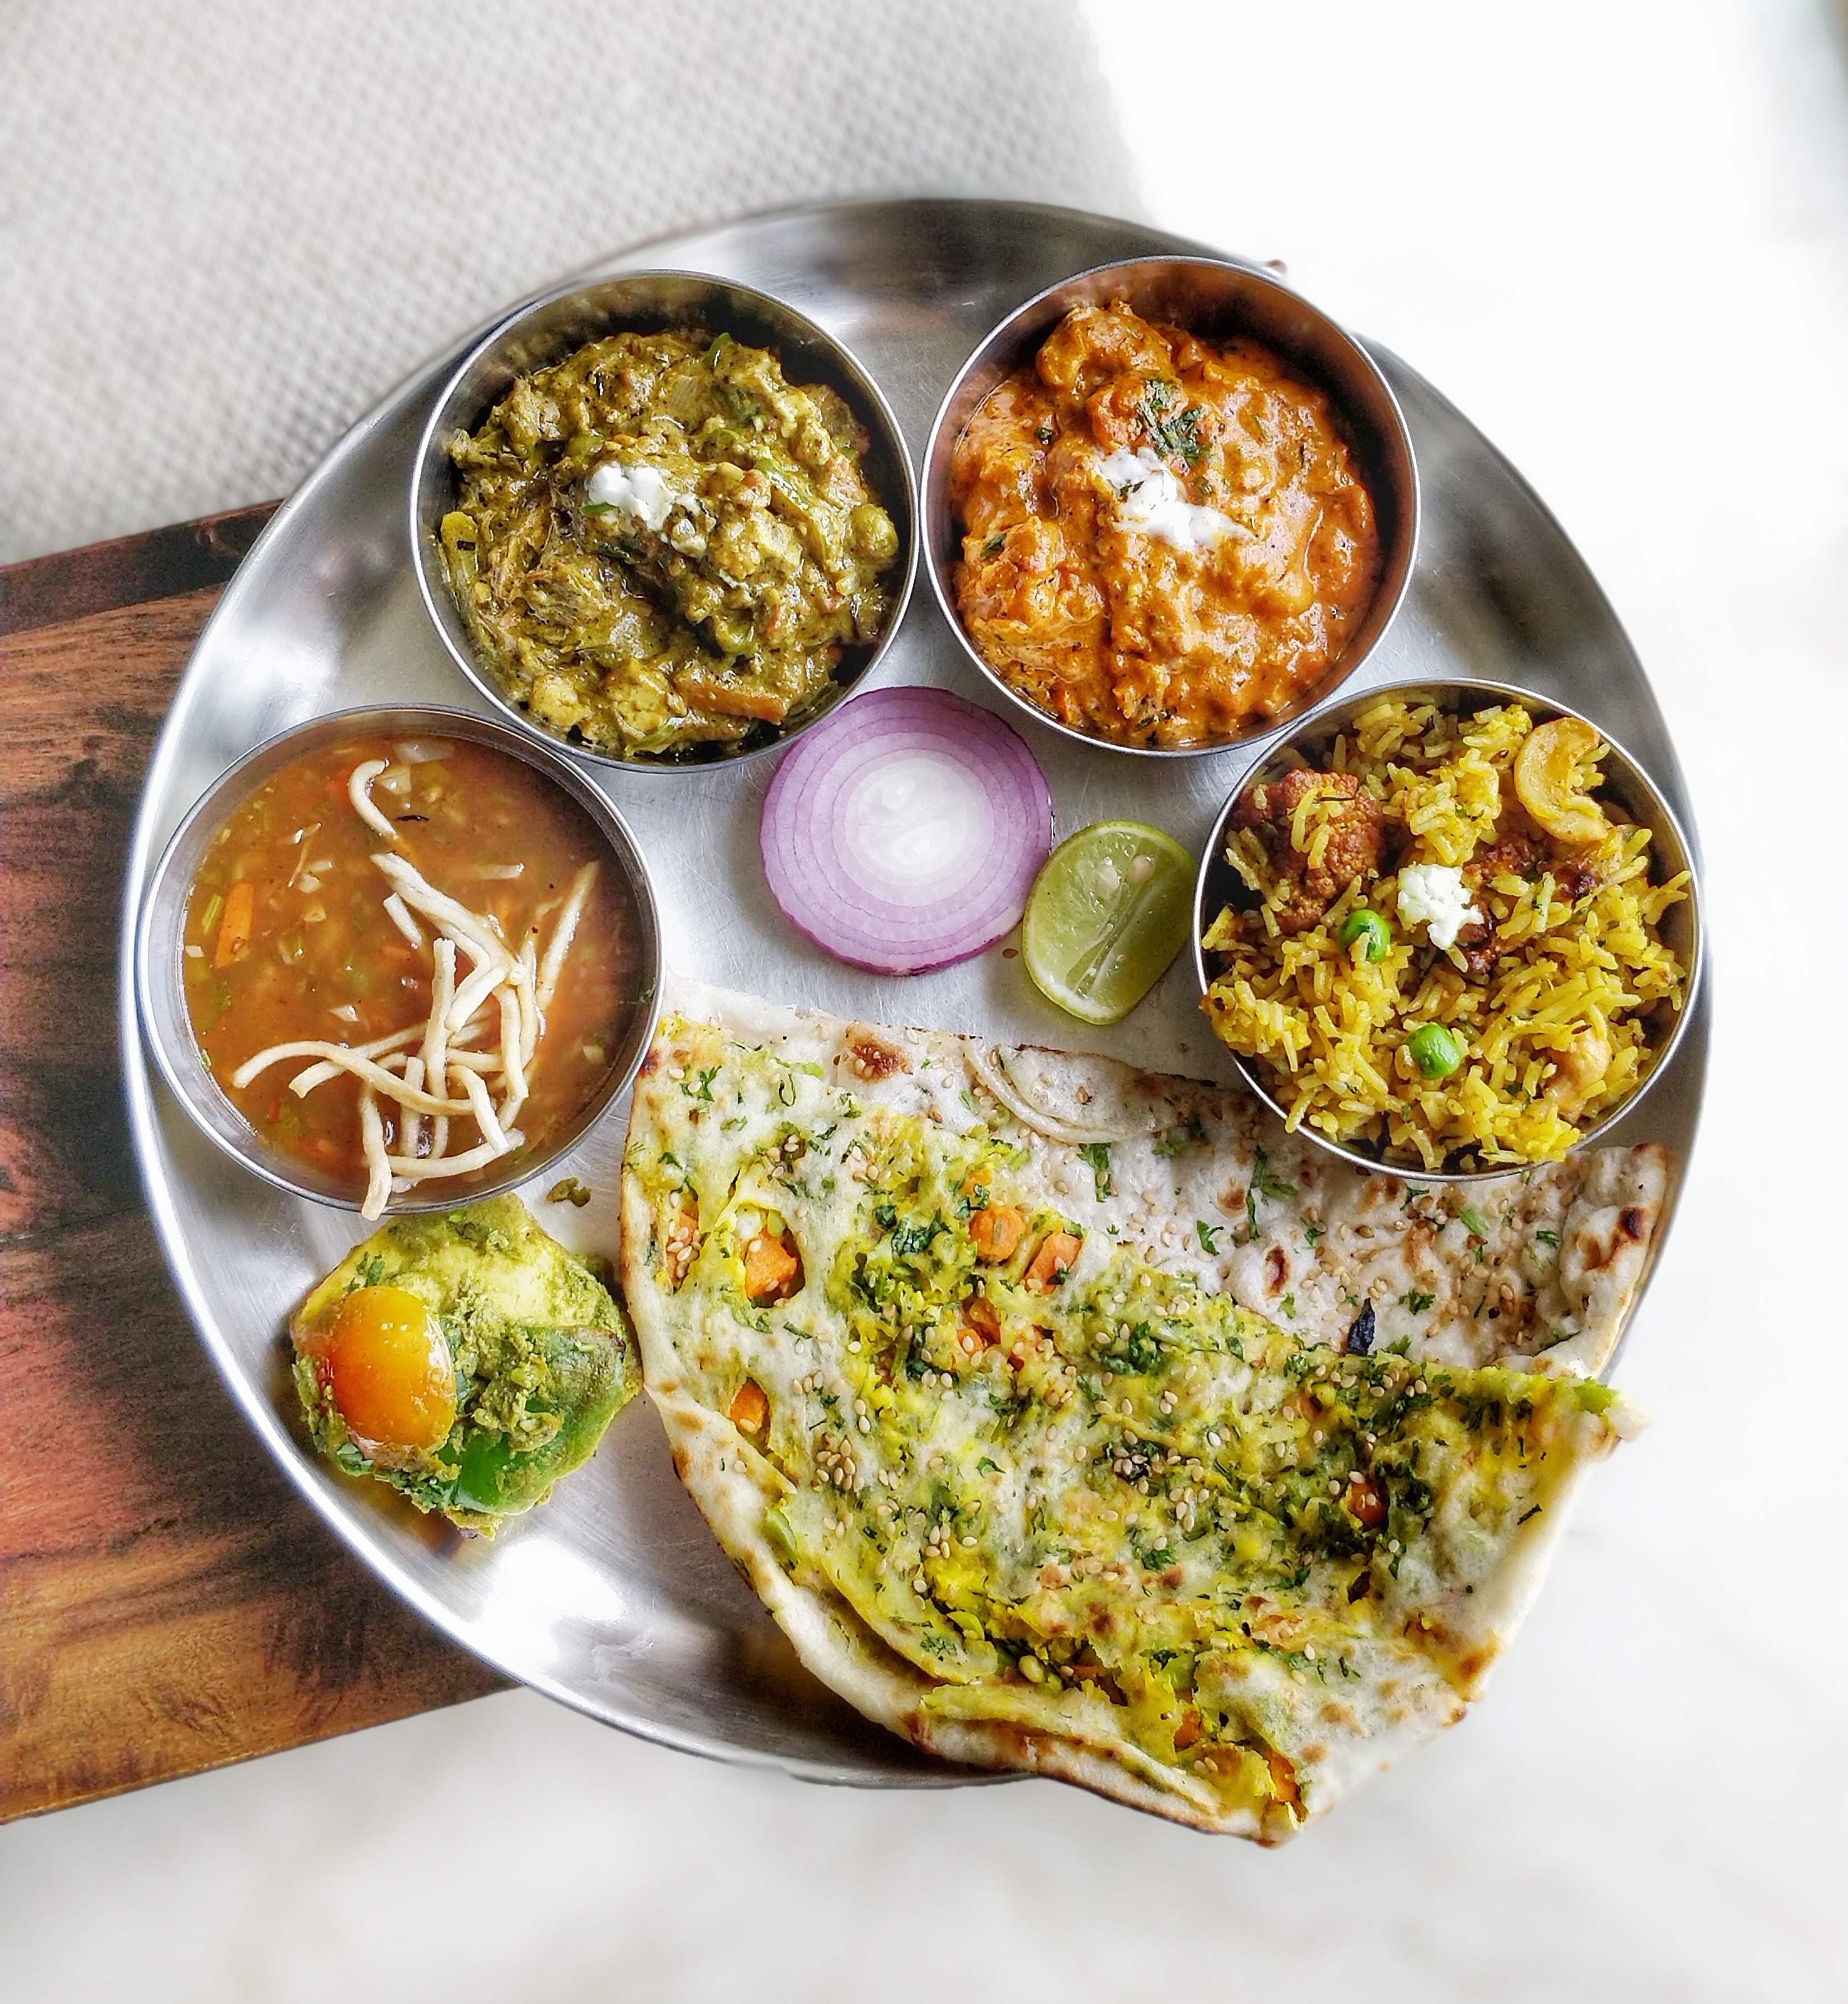 Dish,Food,Cuisine,Ingredient,Meal,Vegetarian food,Indian cuisine,Recipe,Produce,Lunch